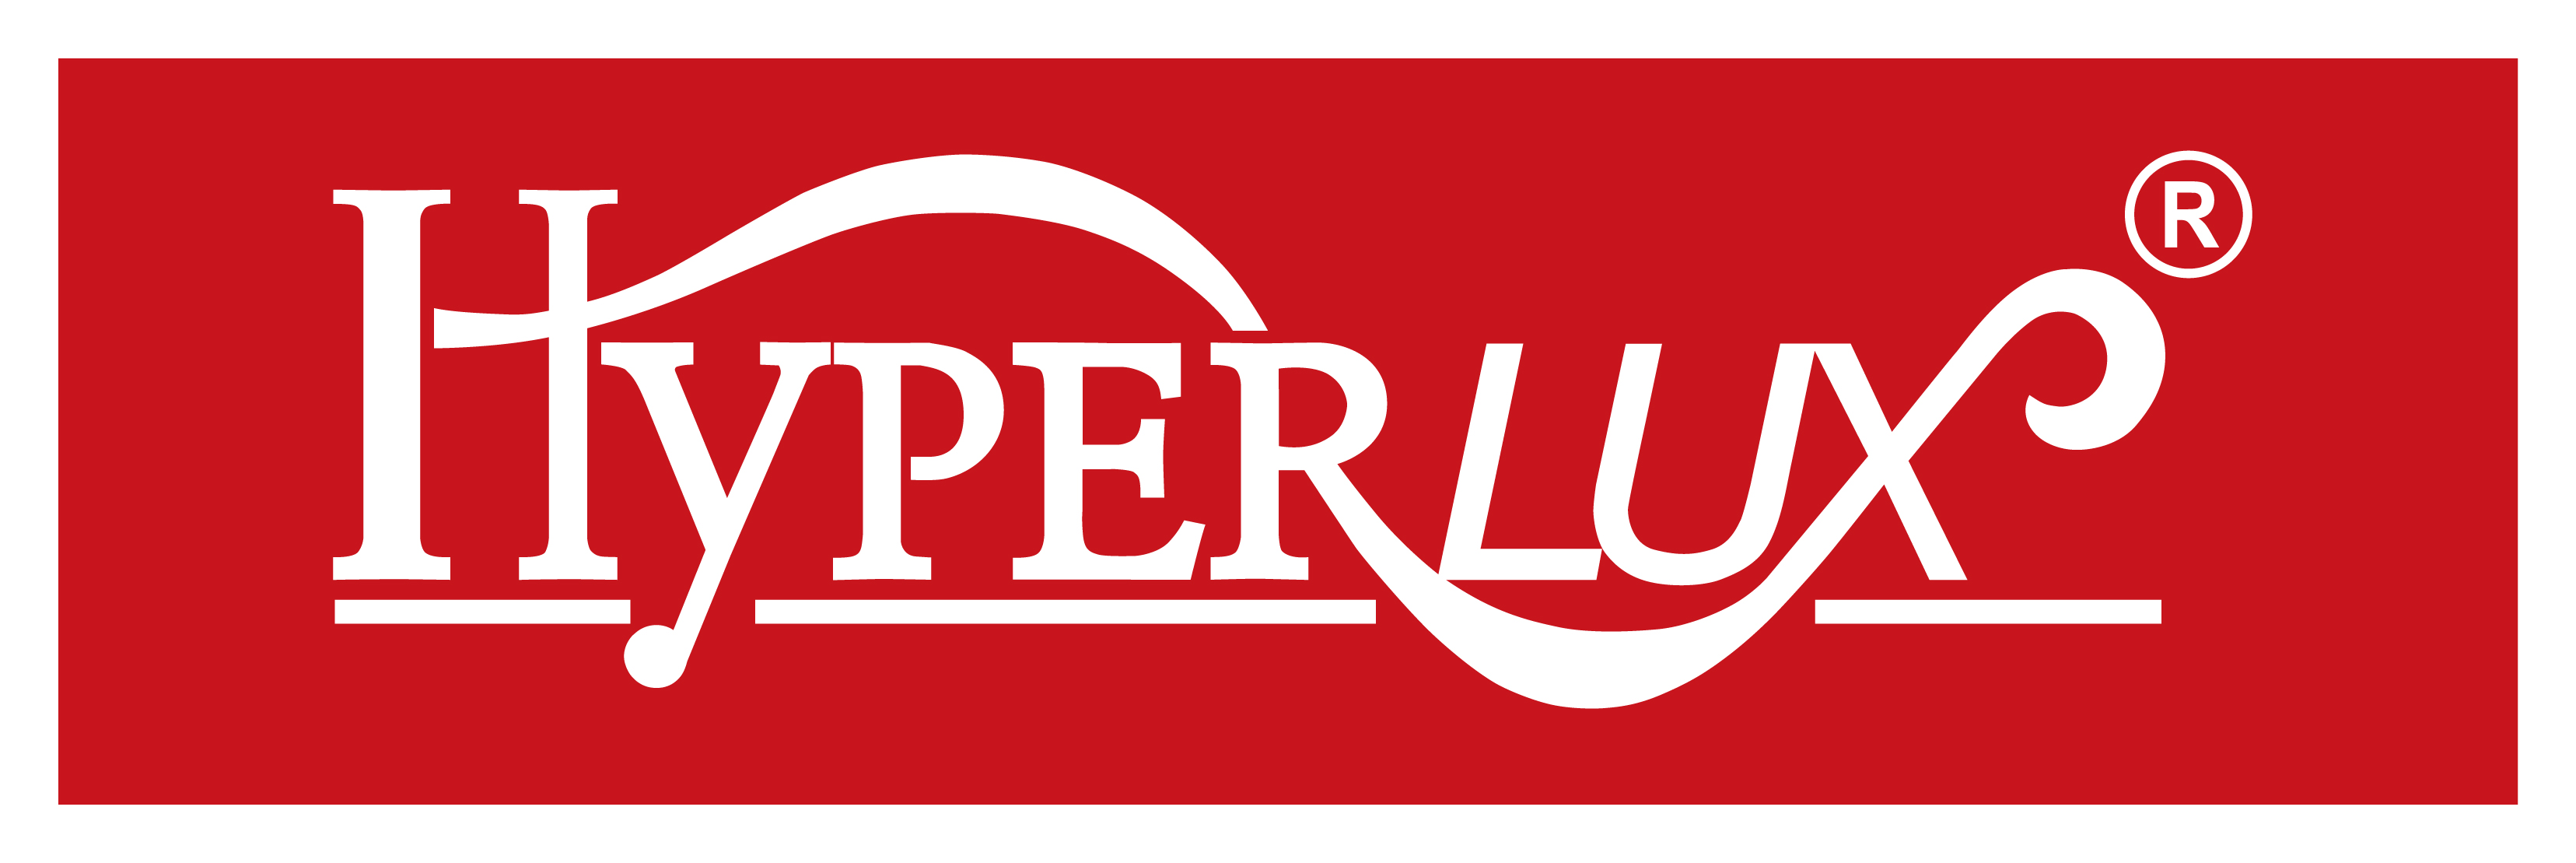 hyperlux new logo in red 2017